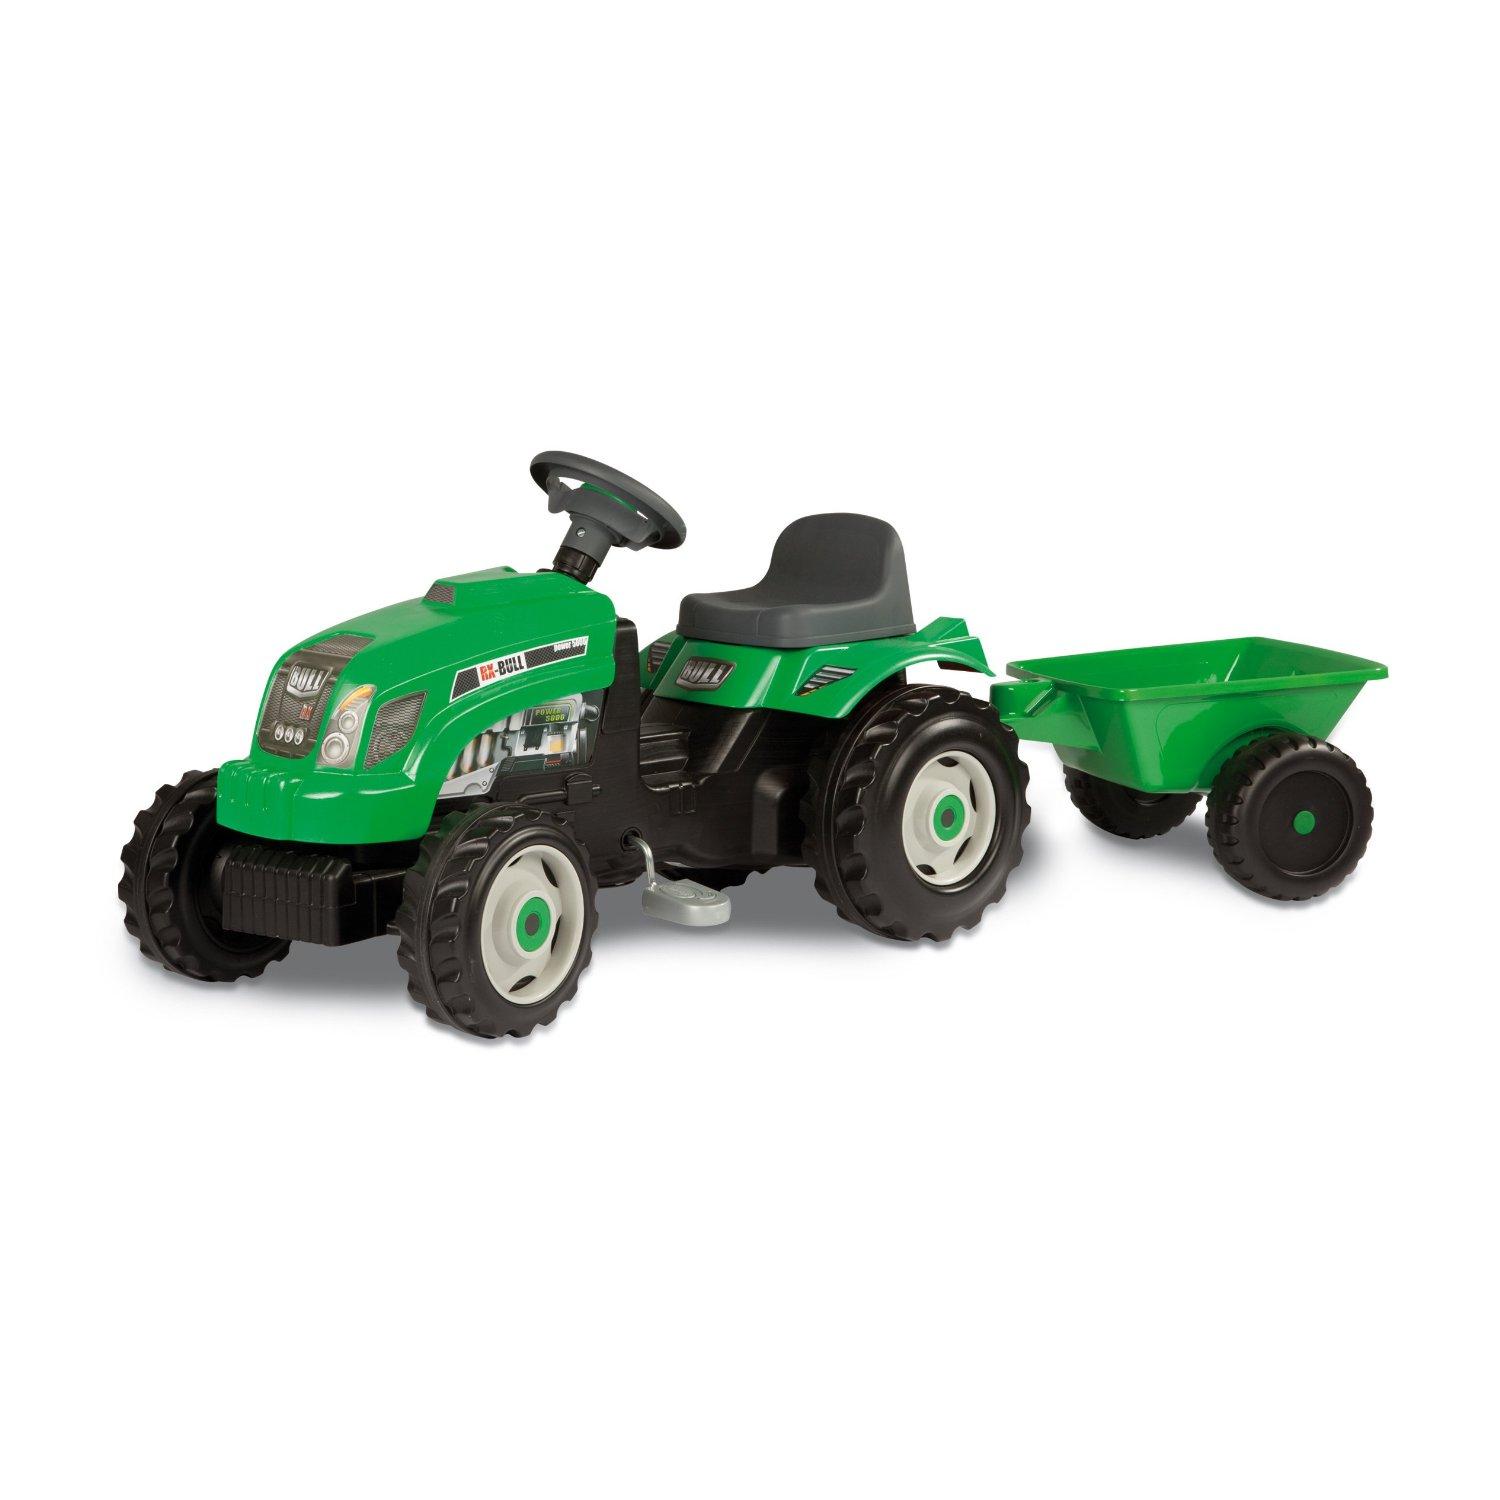 Foto Tractor a pedales verde con remolque foto 626252